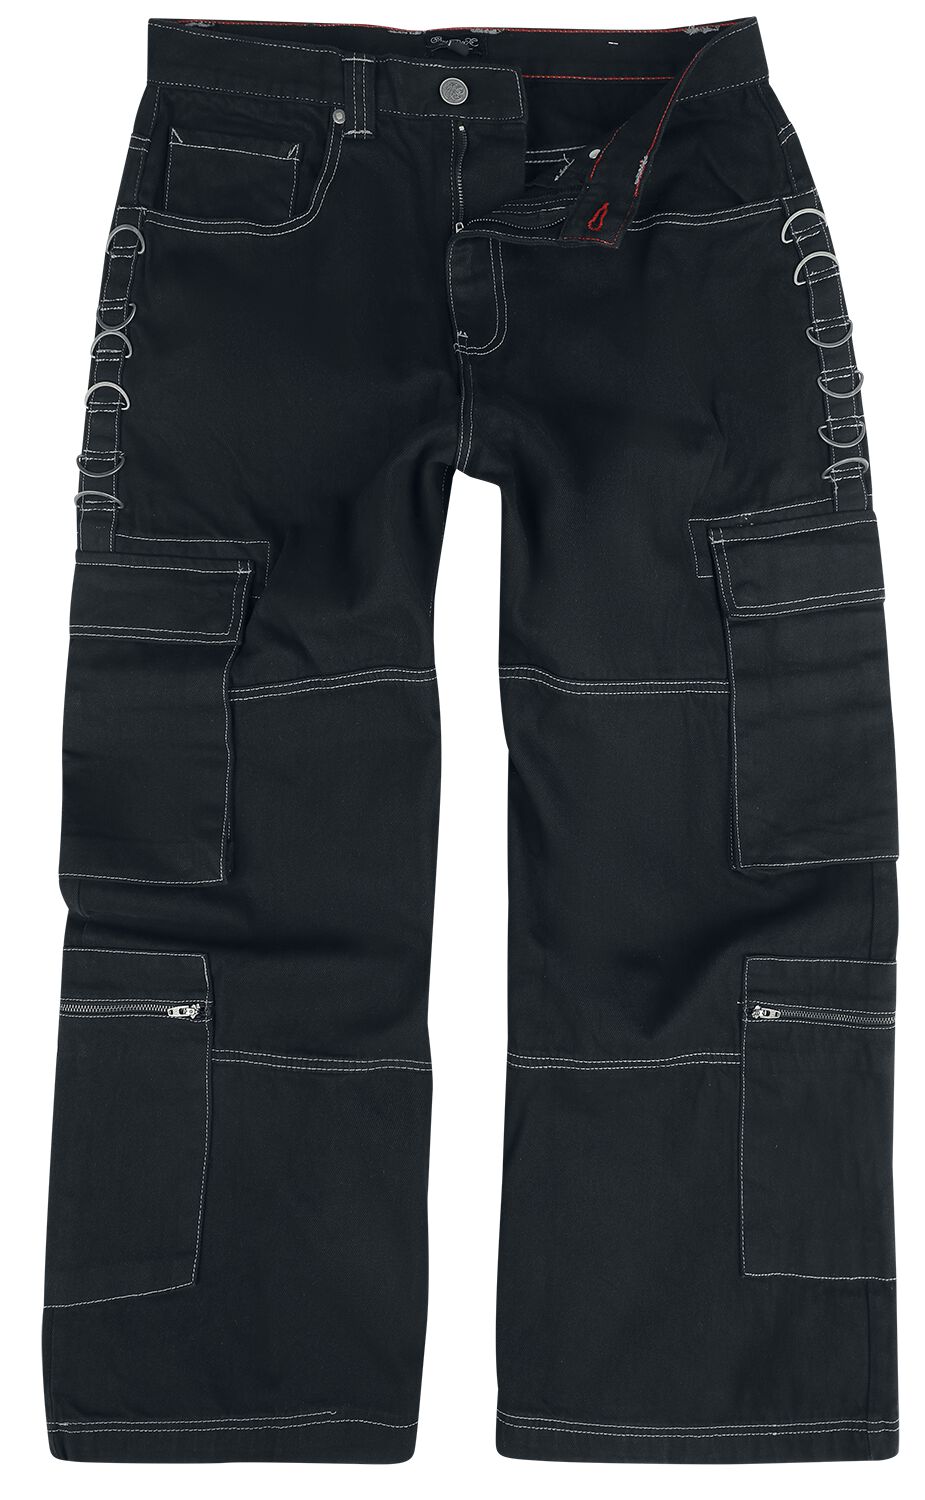 Chet Rock Jeans - Monaghan Utility Jeans - W30L32 bis W38L34 - für Männer - Größe W34L32 - schwarz